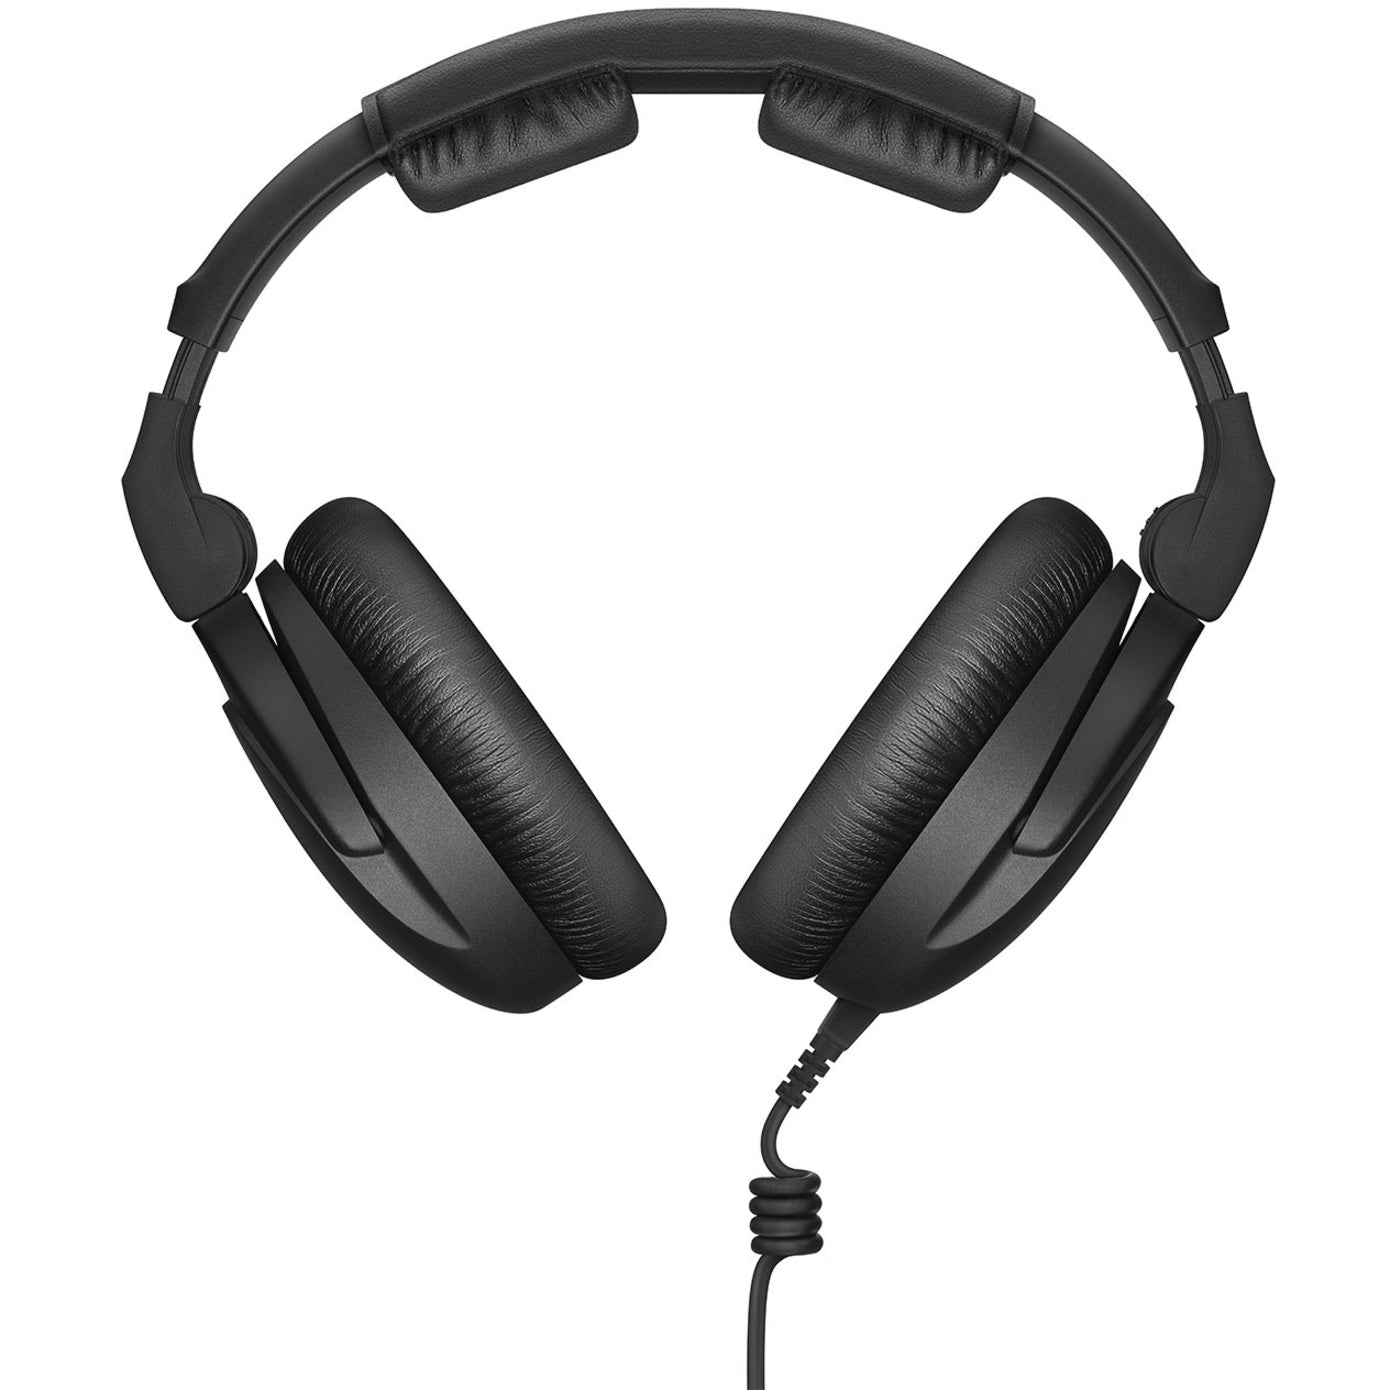 Sennheiser 508288 HD 300 PRO Headphone, Foldable, Noise Reduction, Sound Isolation